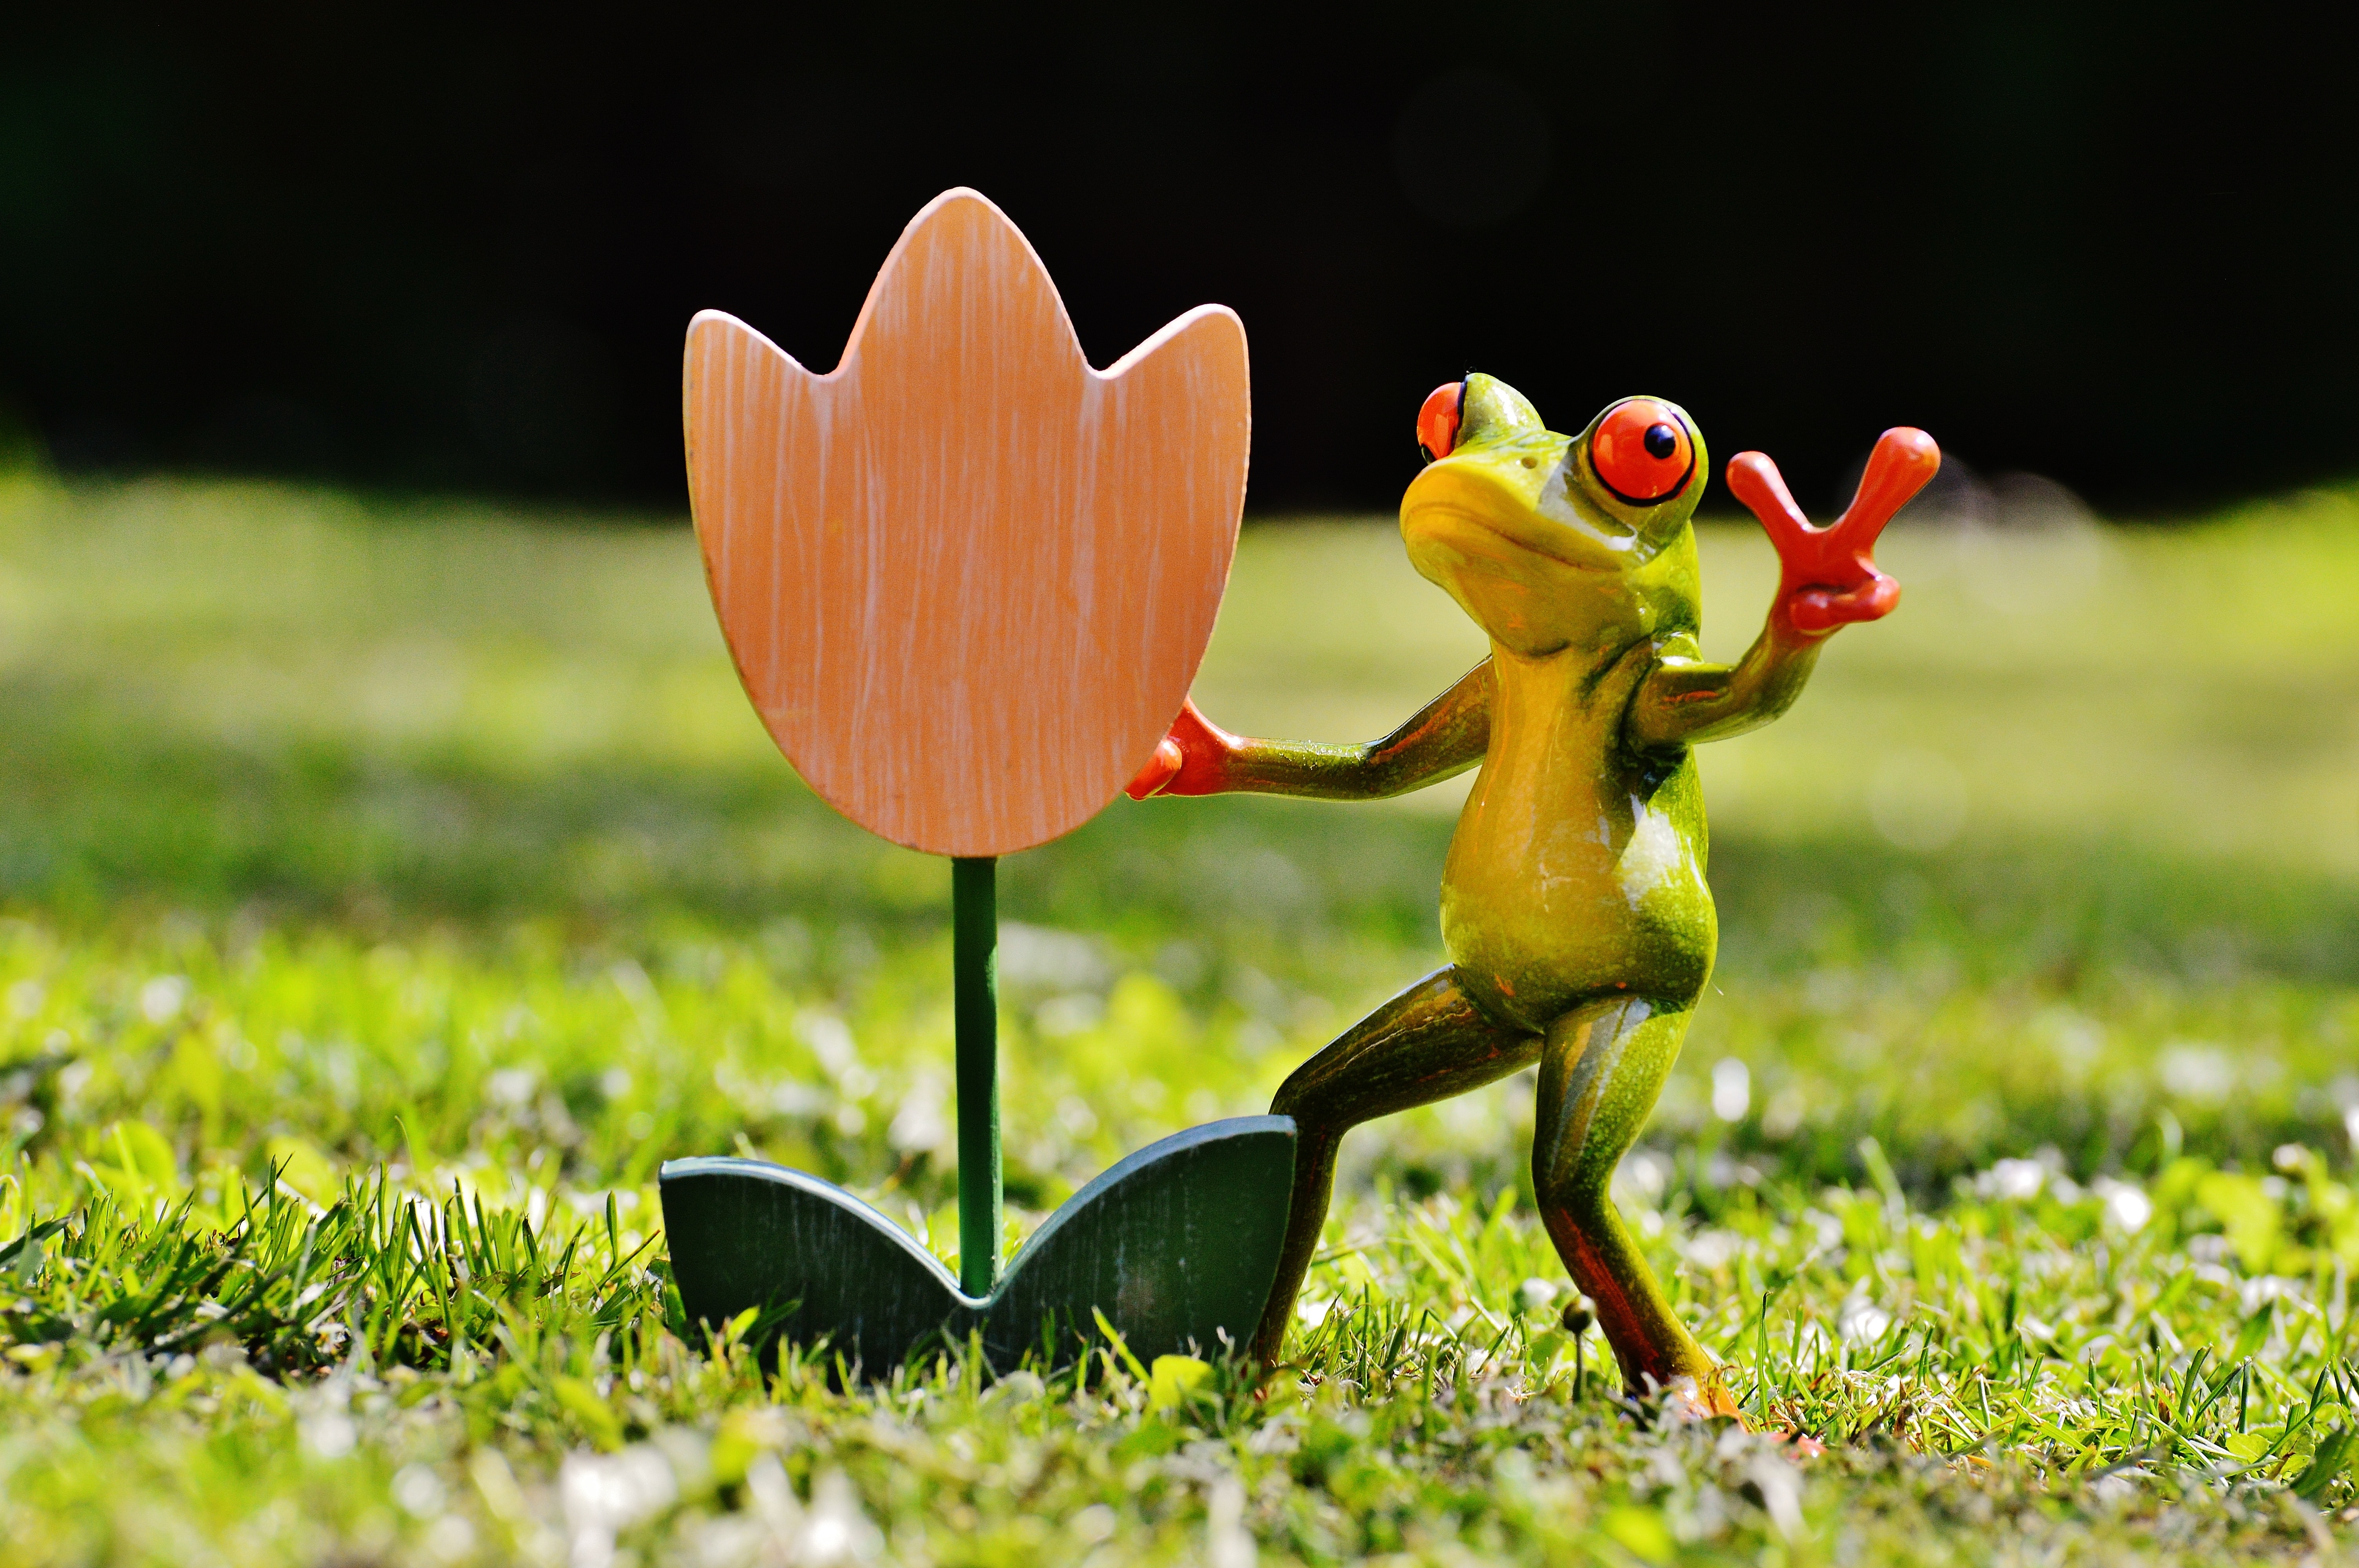 frog holding tulips flower design lawn decor